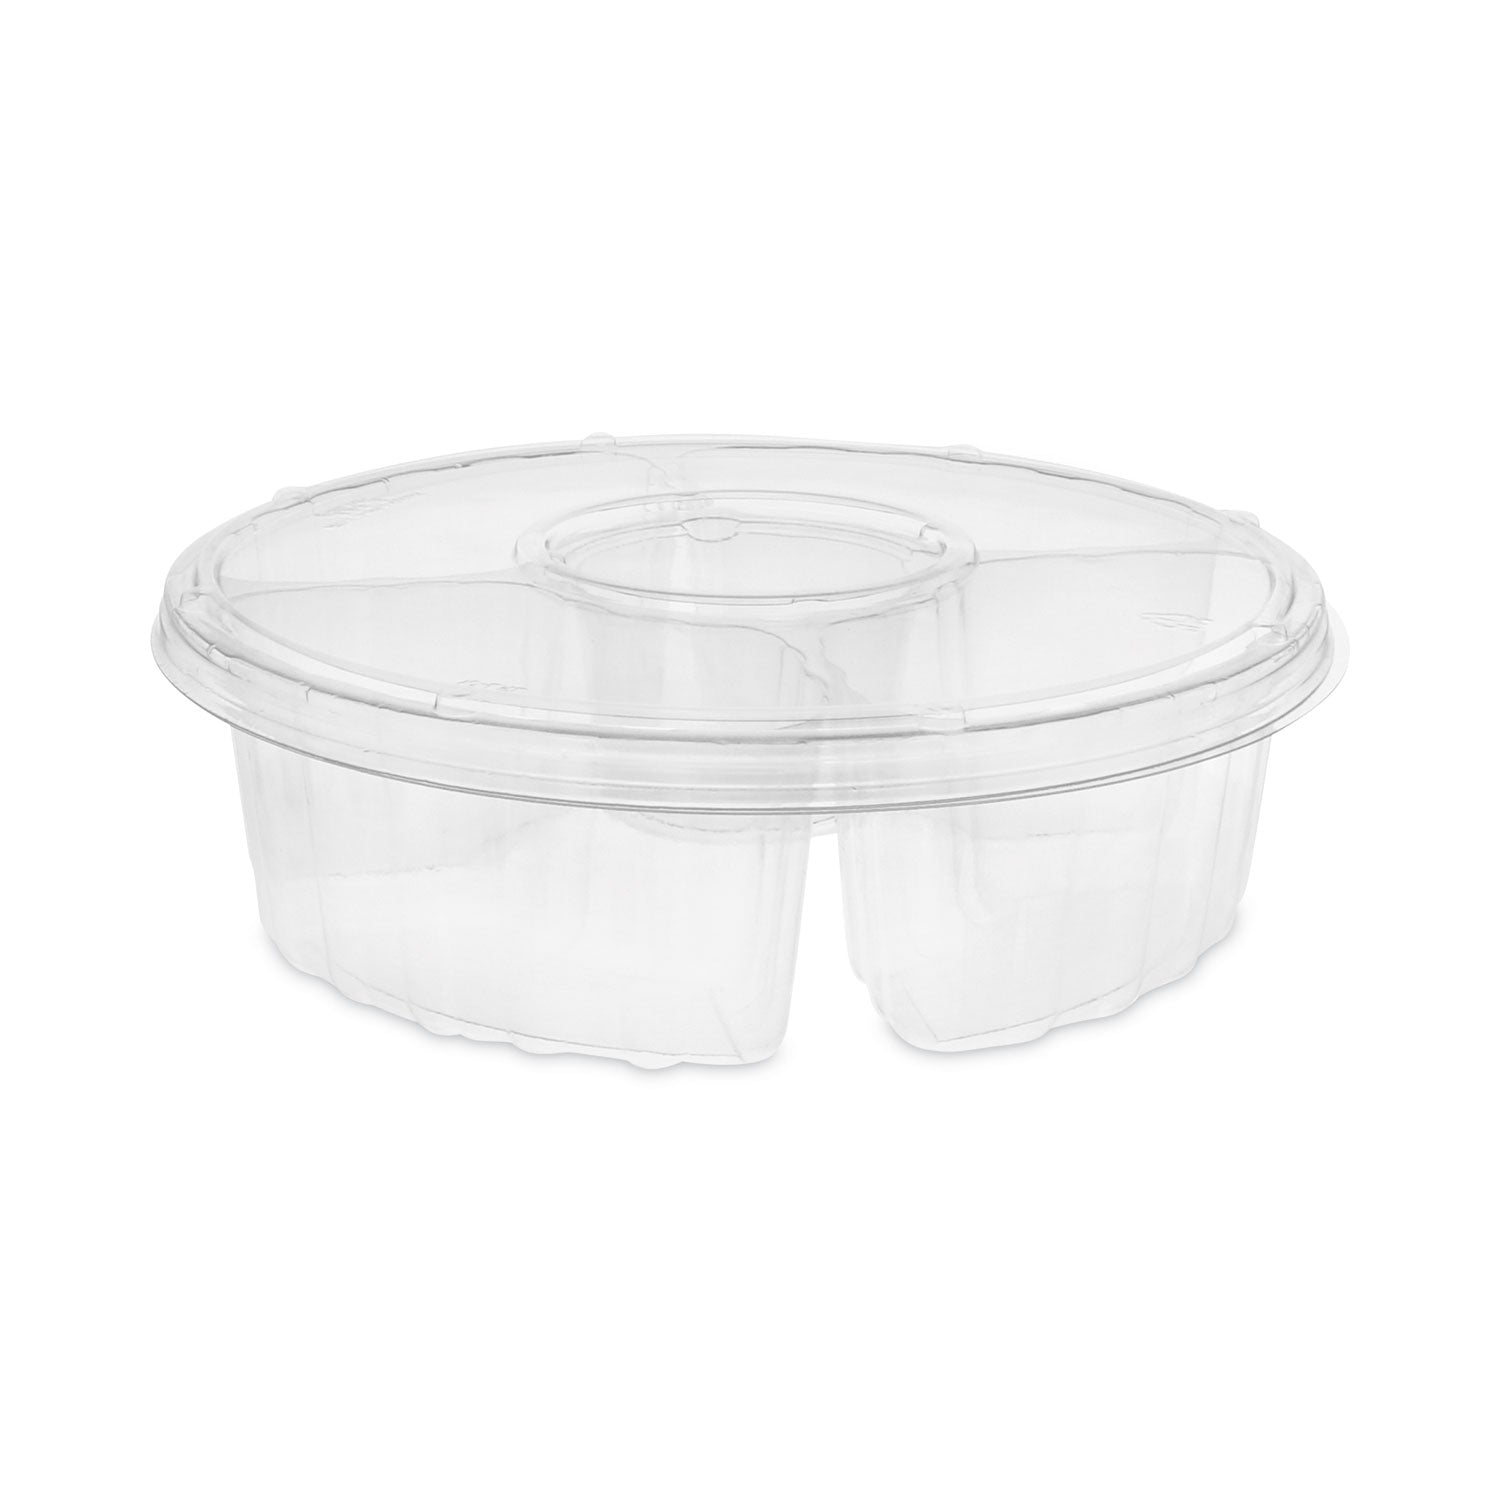 dip-cup-platter-4-compartment-64-oz-10-diameter-clear-plastic-100-carton_pct1064dp4clrl - 2